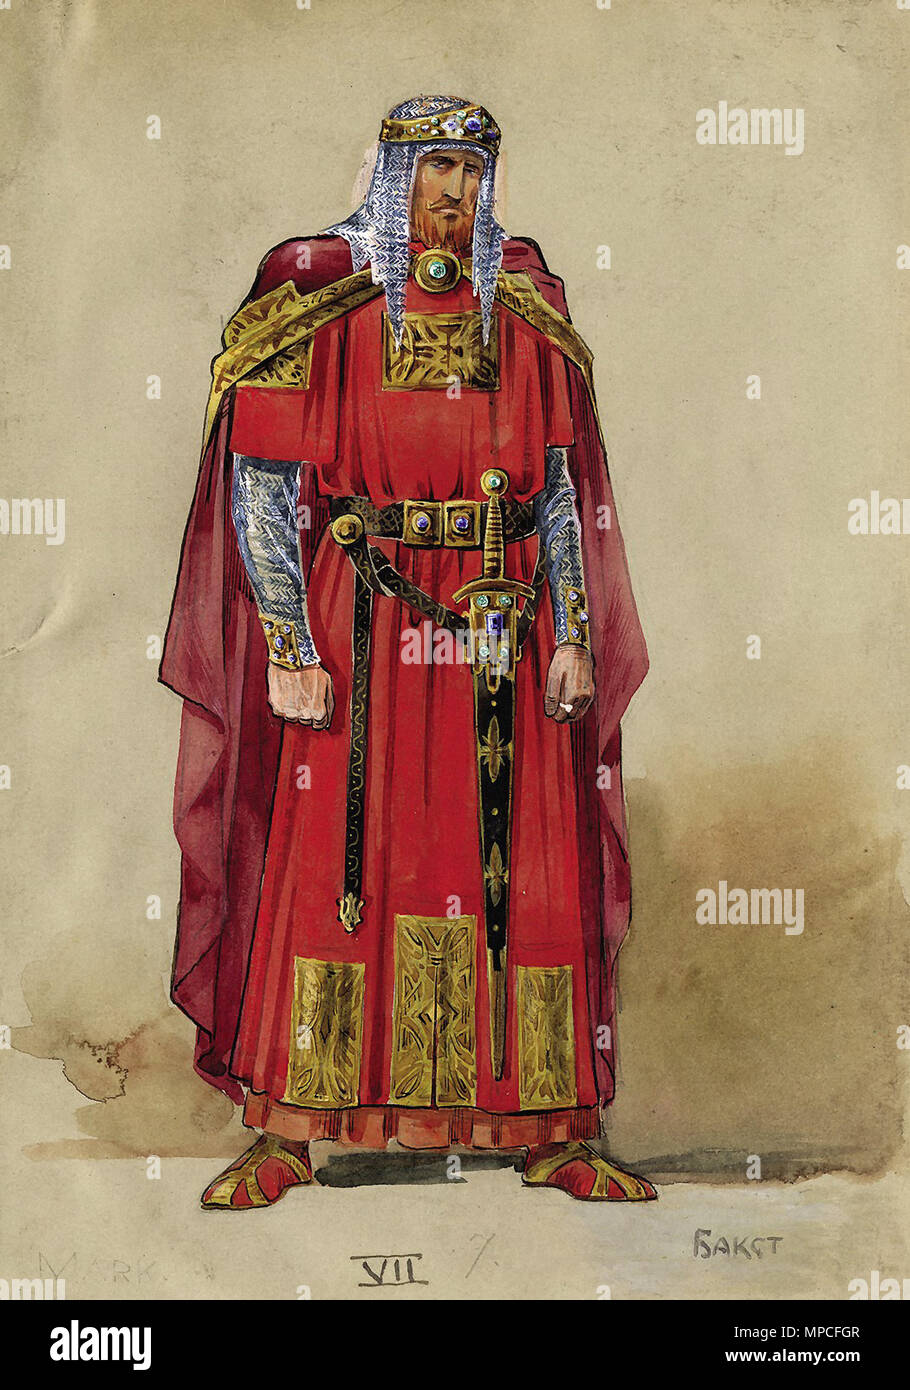 Bakst Leon - Medieval Prince Stock Photo